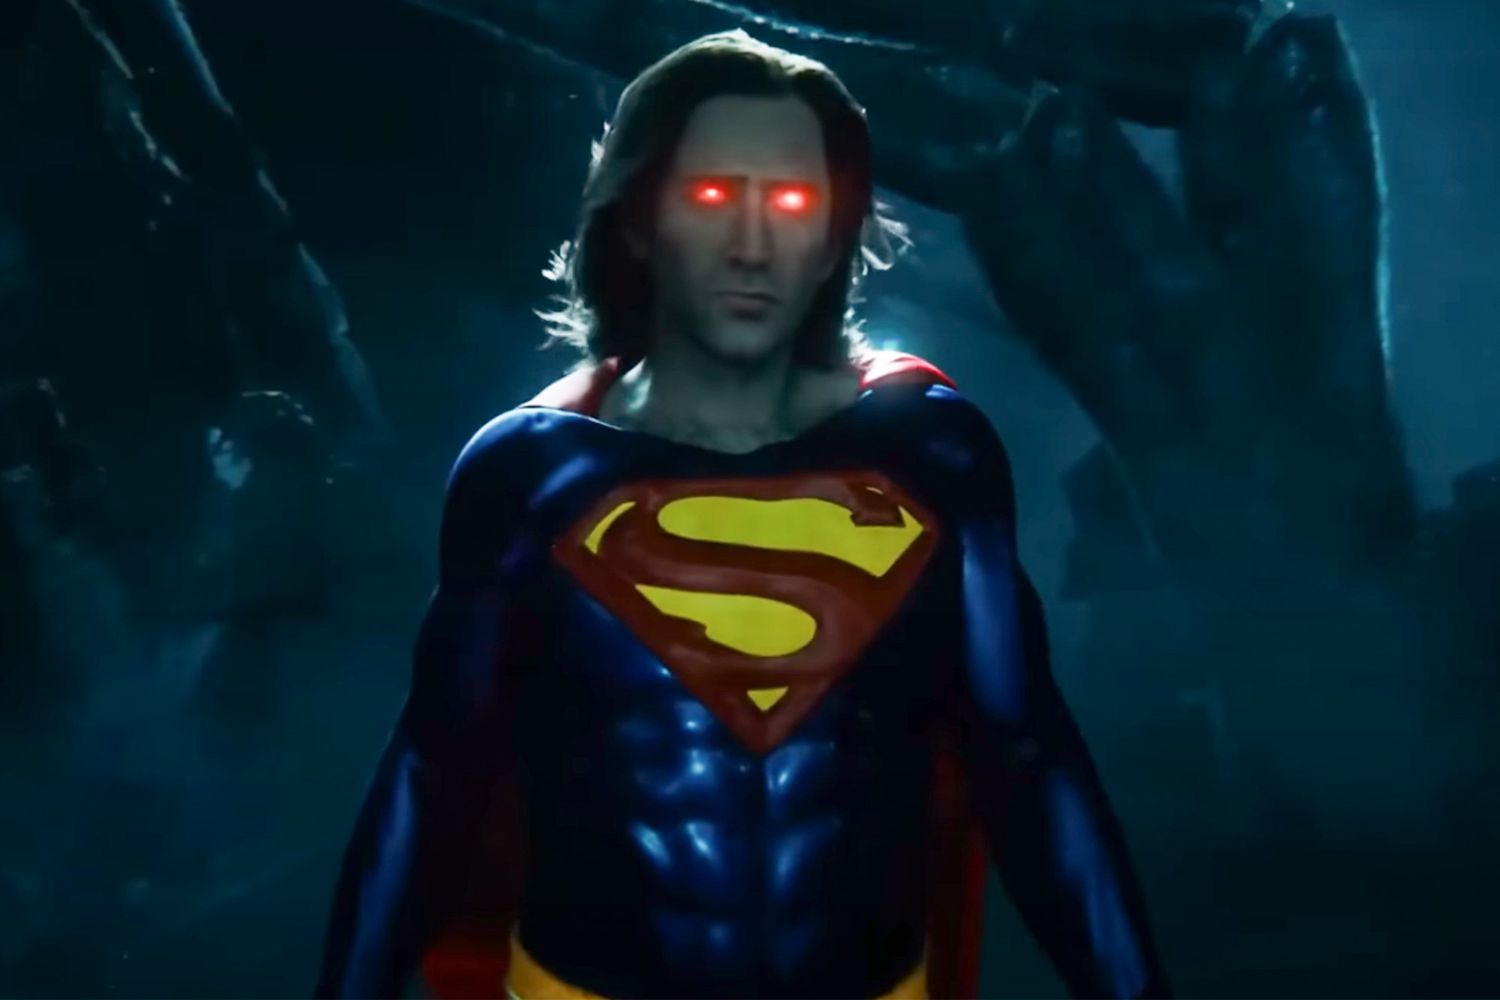 Nicolas Cage's Superman cameo in The Flash